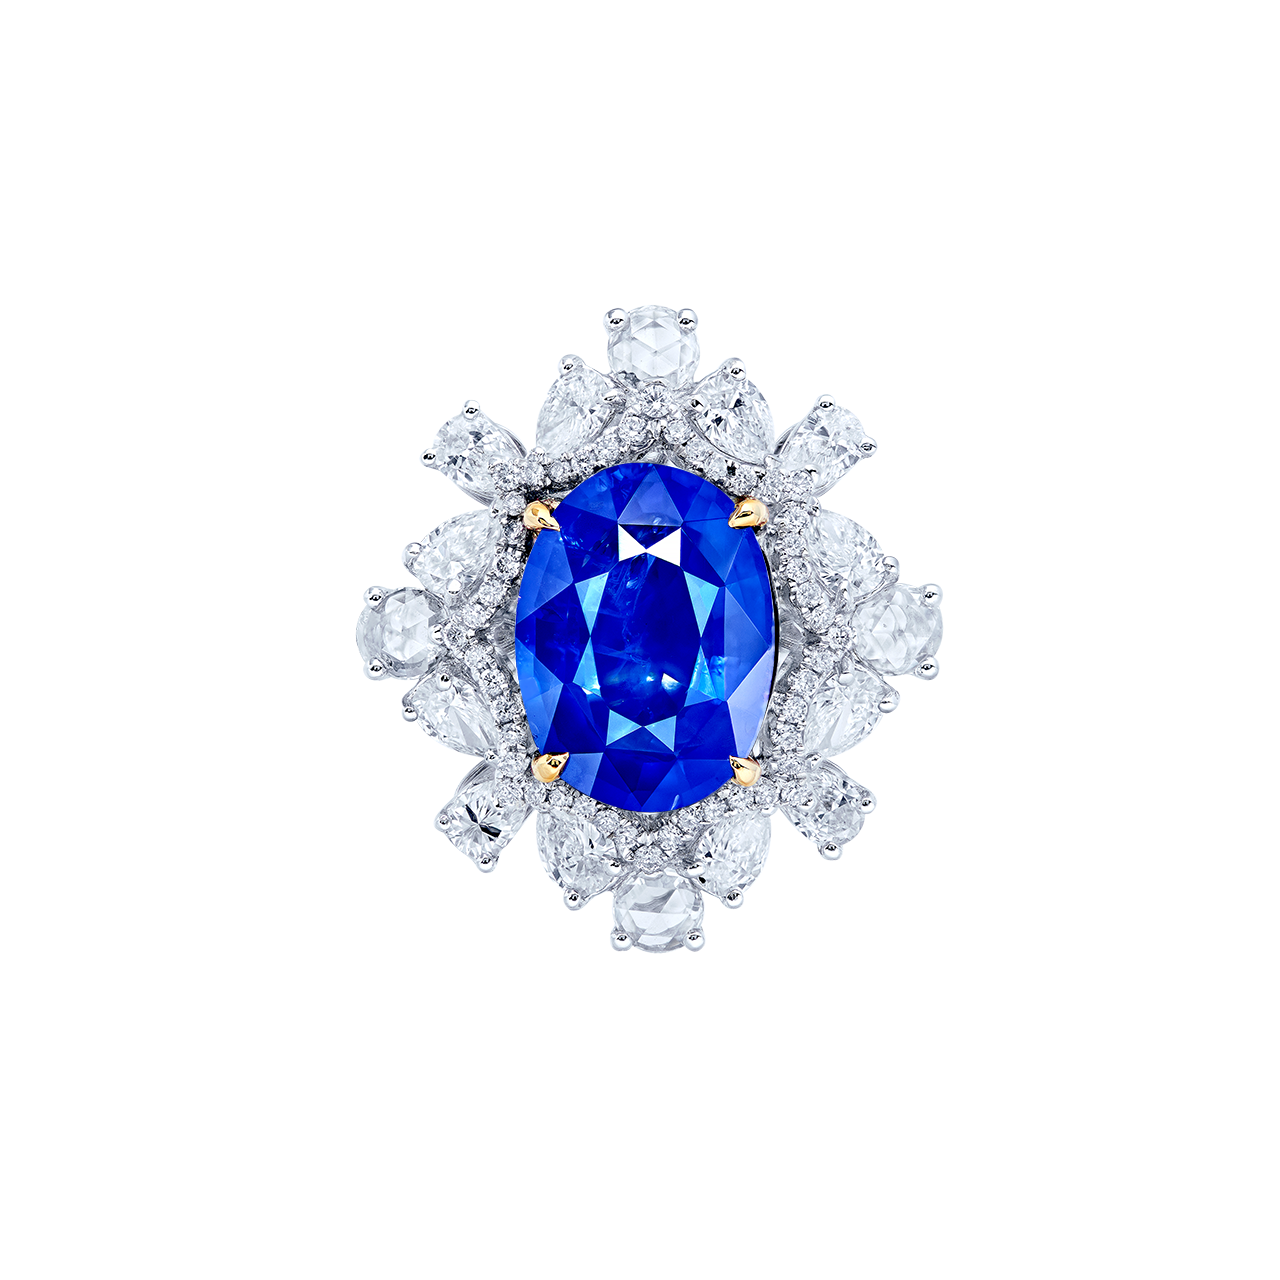 4.08克拉 天然皇家藍藍寶鑽石戒
ROYAL BLUE SAPPHIRE AND DIAMOND RING